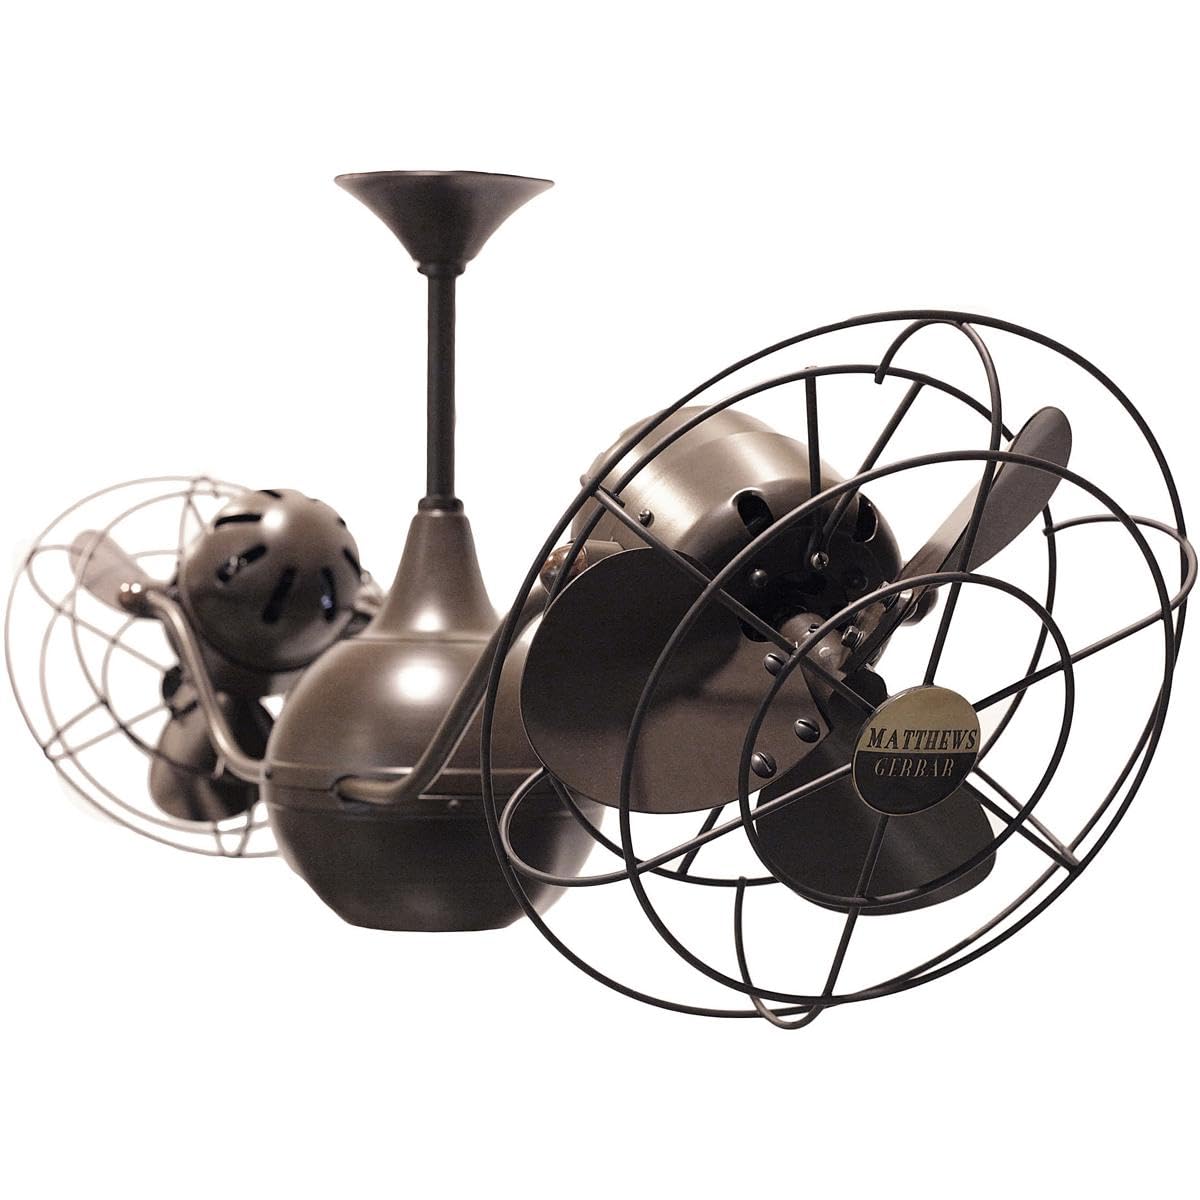 Matthews Fan VB-BZZT-MTL Vent-Bettina 360° dual headed rotational ceiling fan in bronzette finish with metal blades.